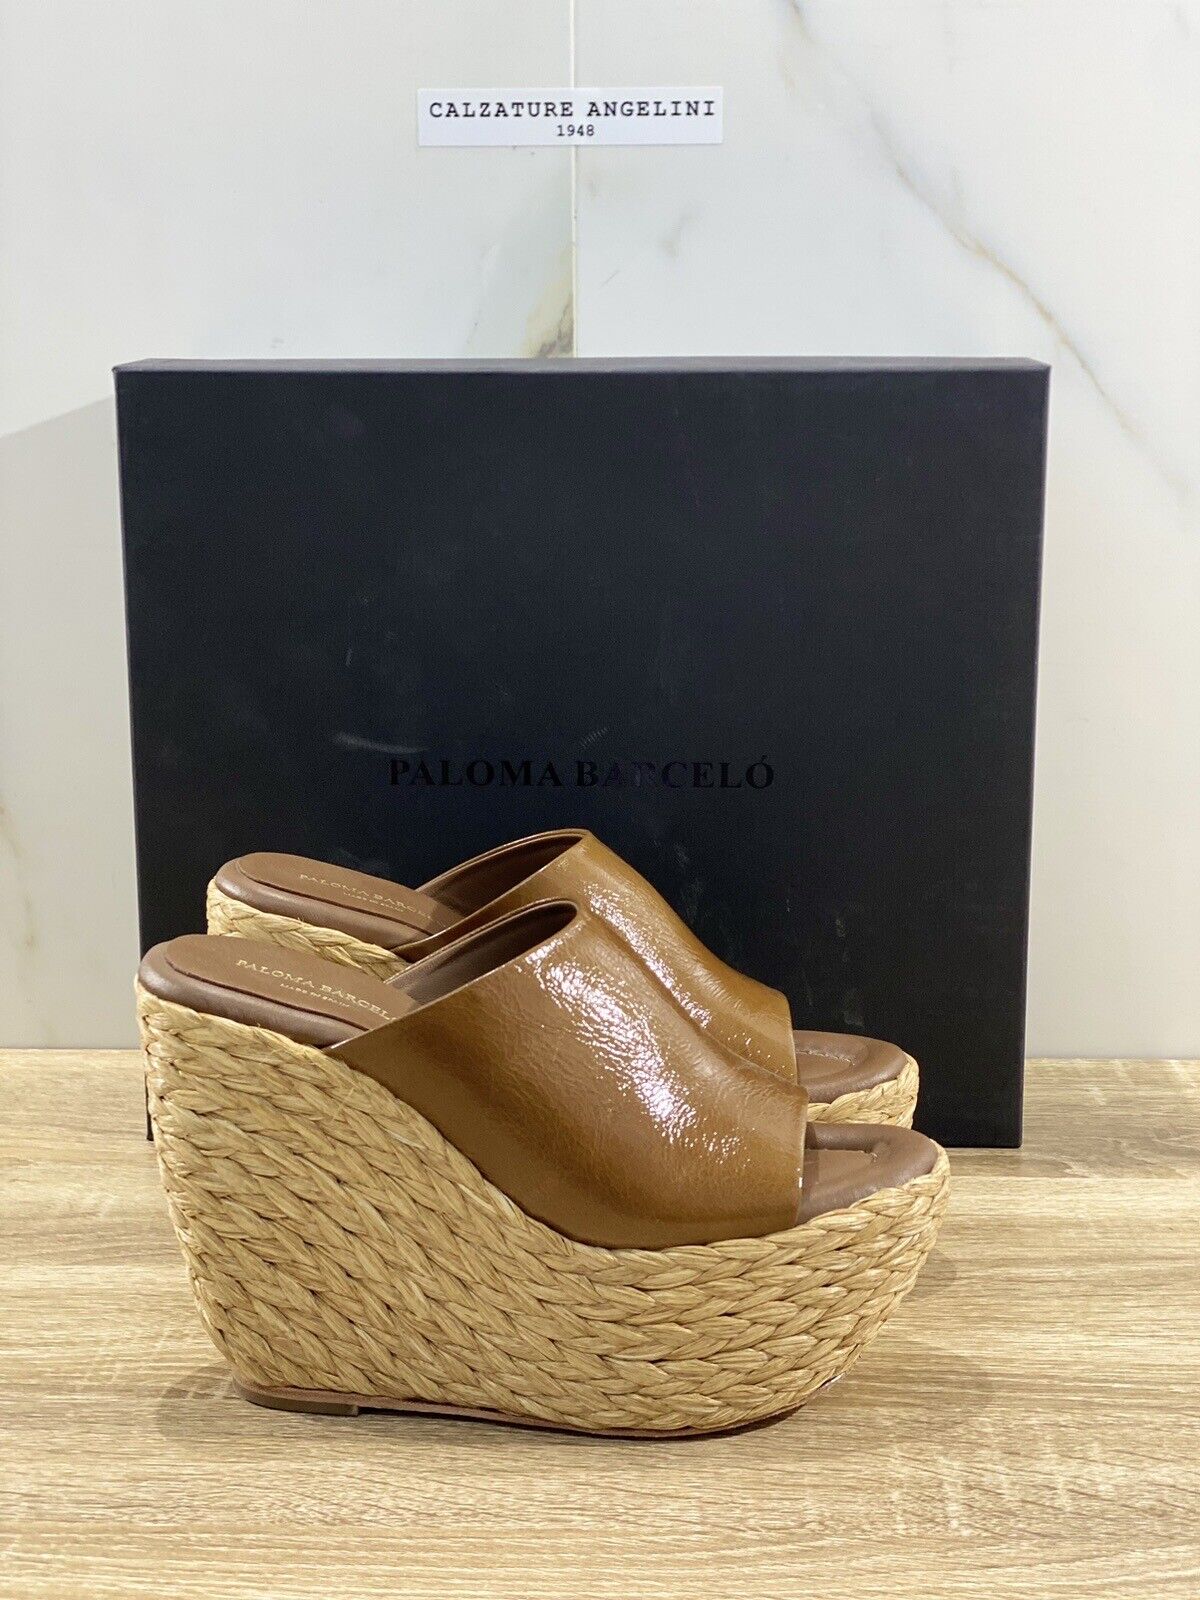 Paloma BARCELO’ Sandalo Donna Ritmo Zeppa Pelle Brown Luxury Shoes 36